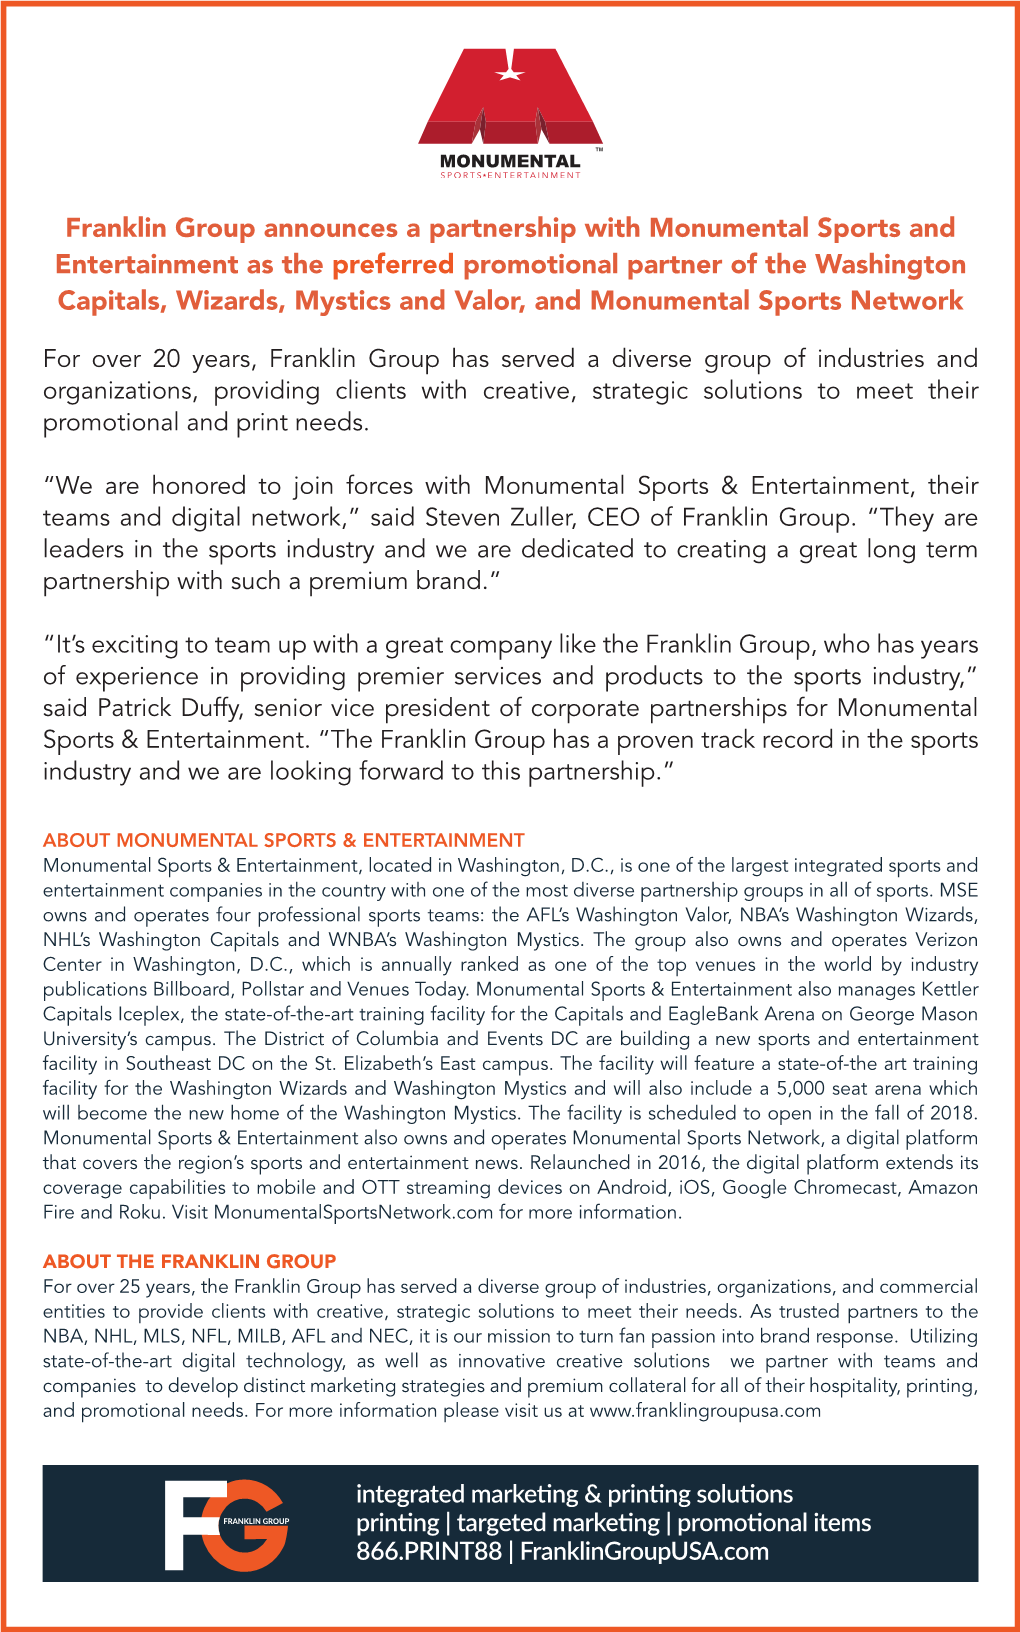 Franklin Group Announces a Partnership with Monumental